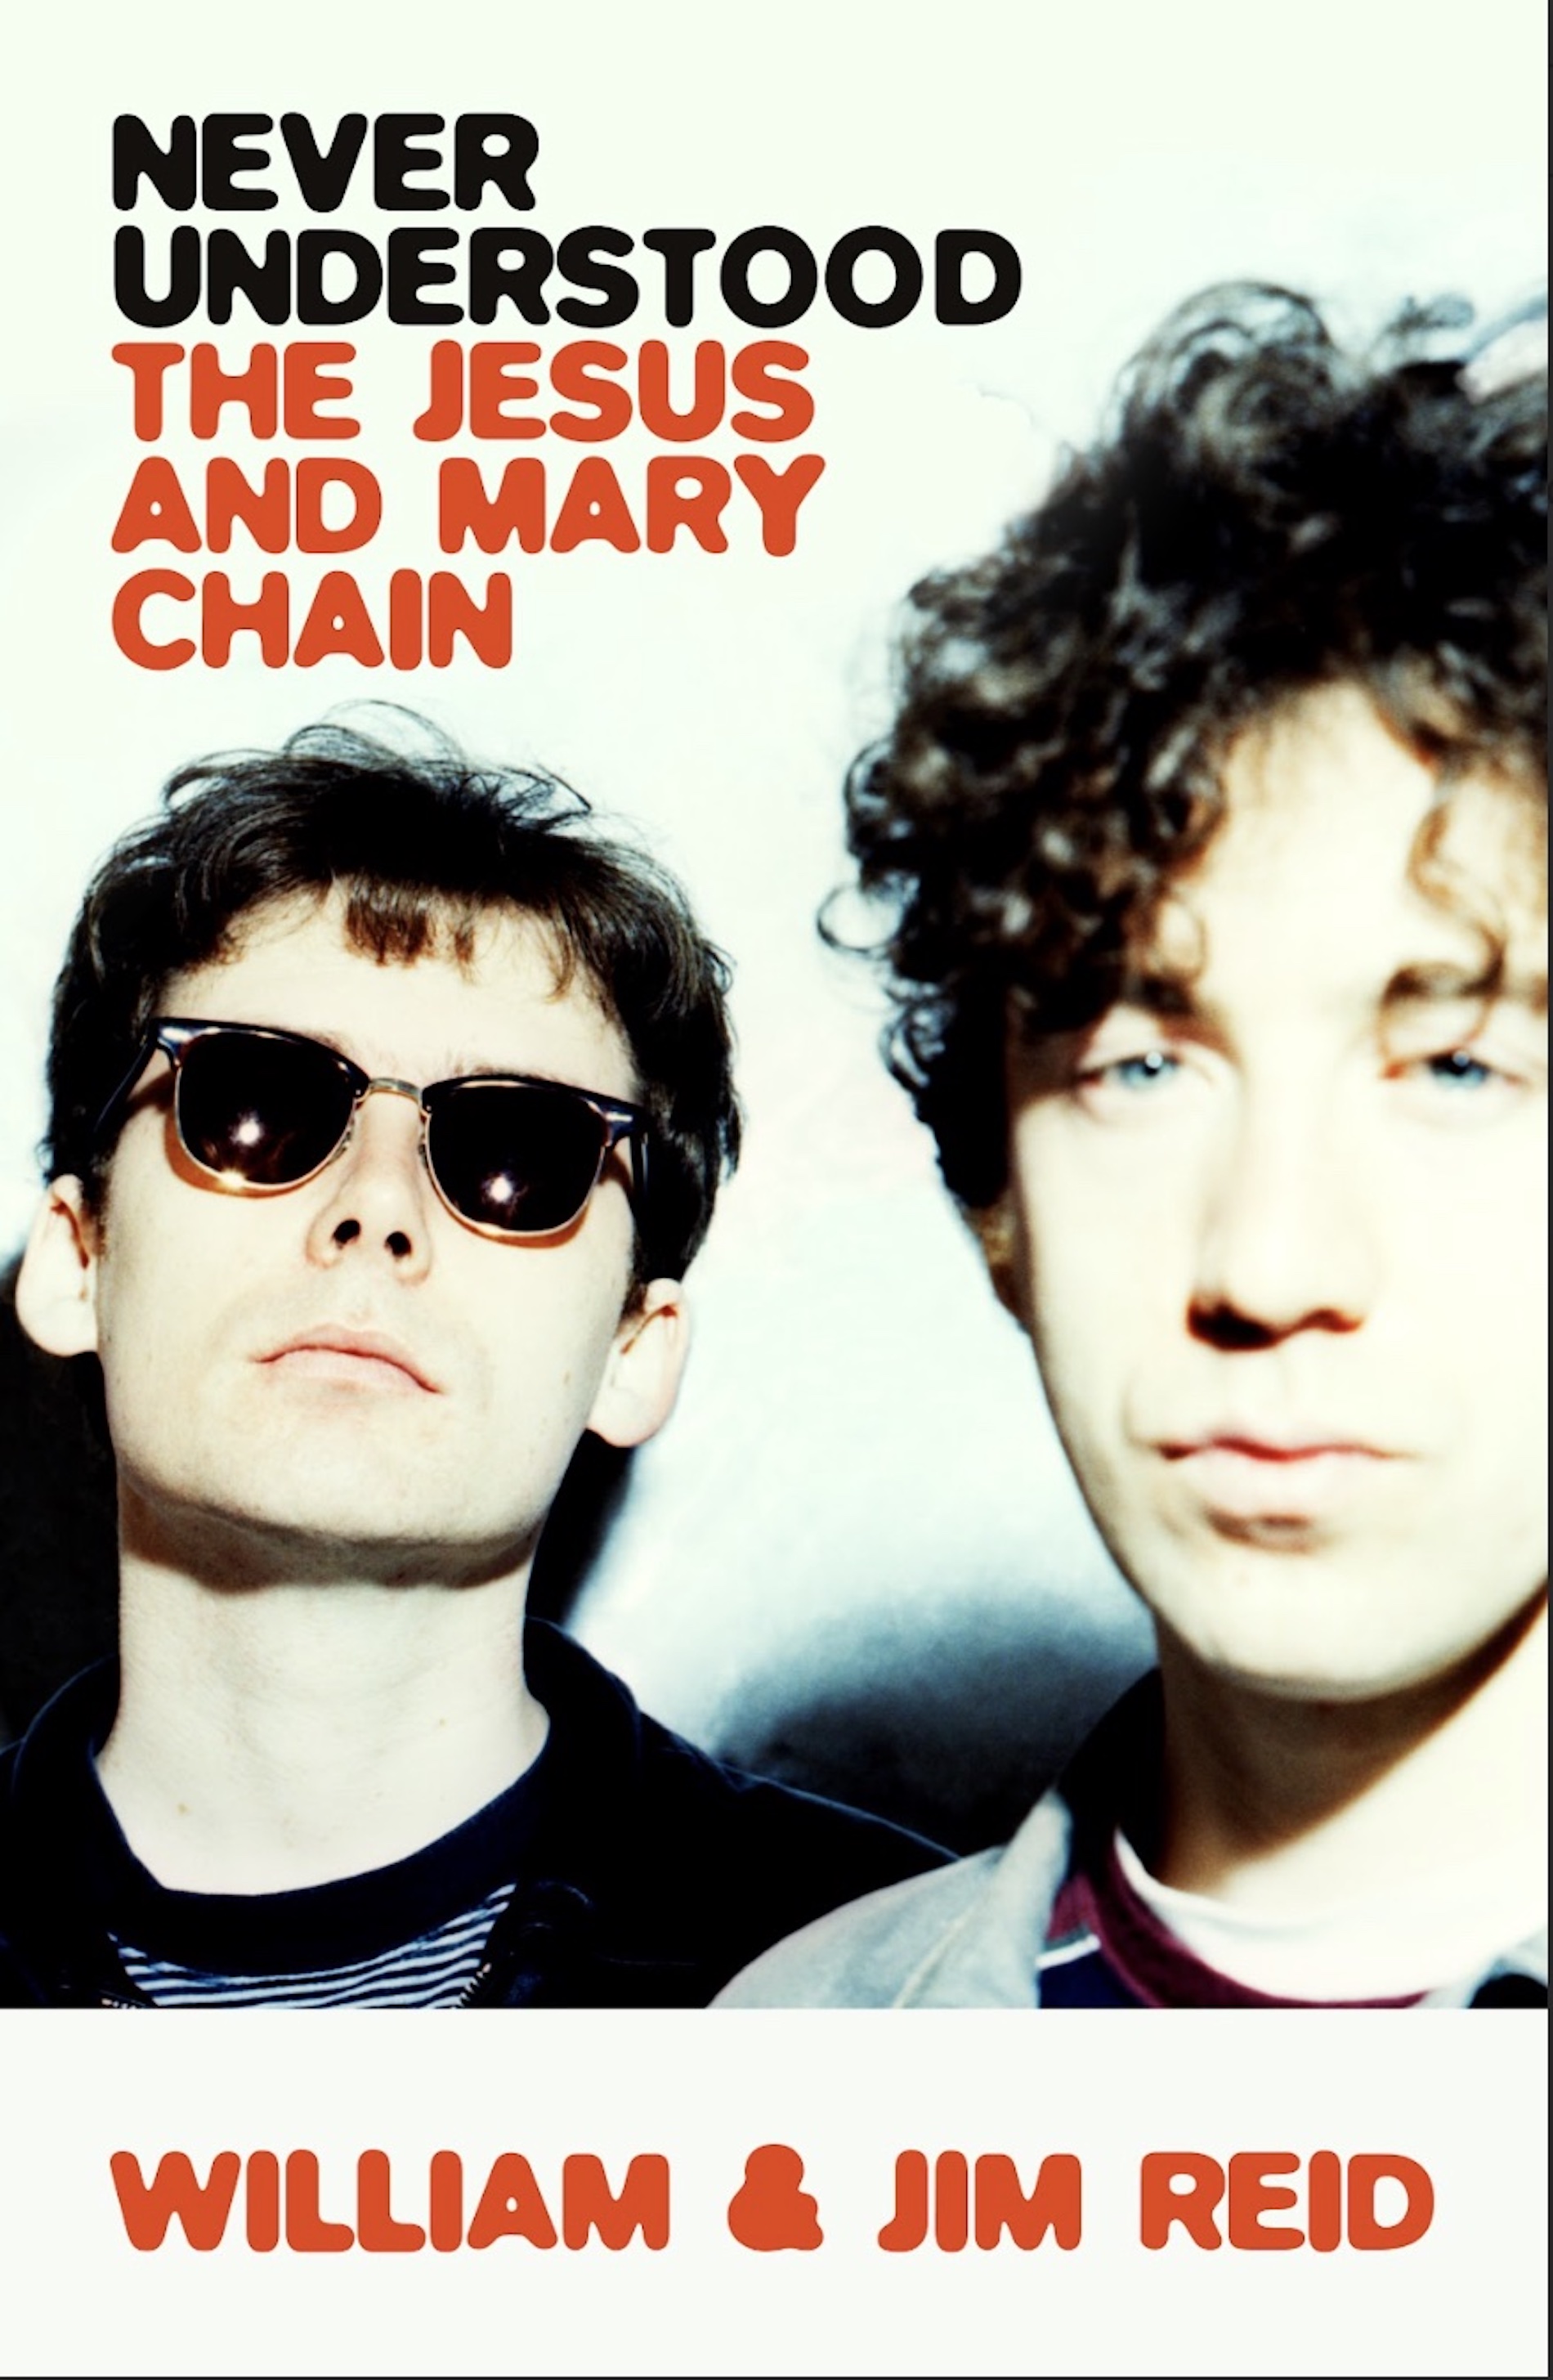 The Jesus & Mary Chain memoir cover. 